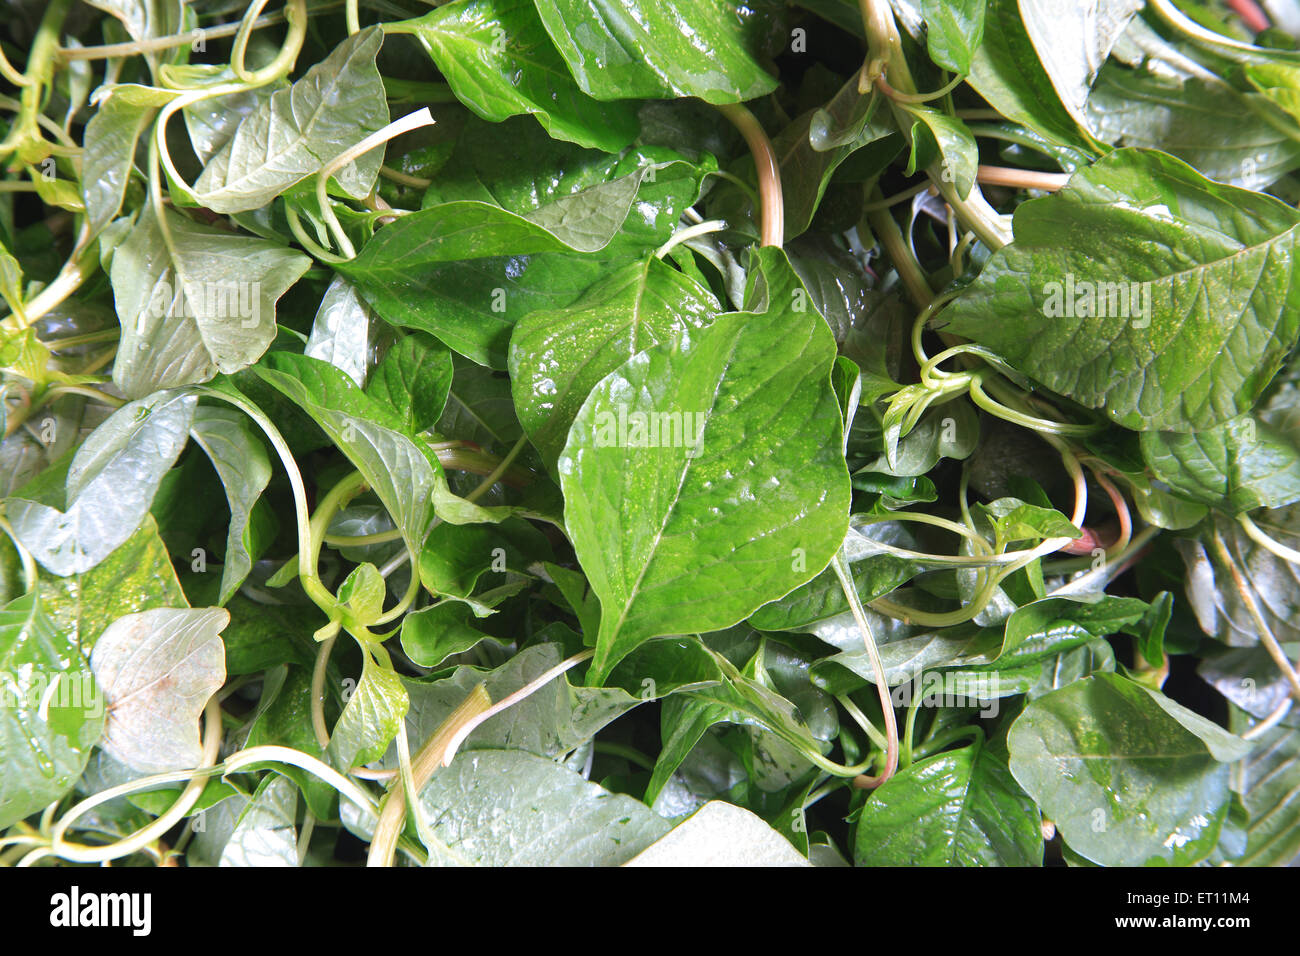 Chawli leaves, Amaranth leaves, chauli leaves Stock Photo